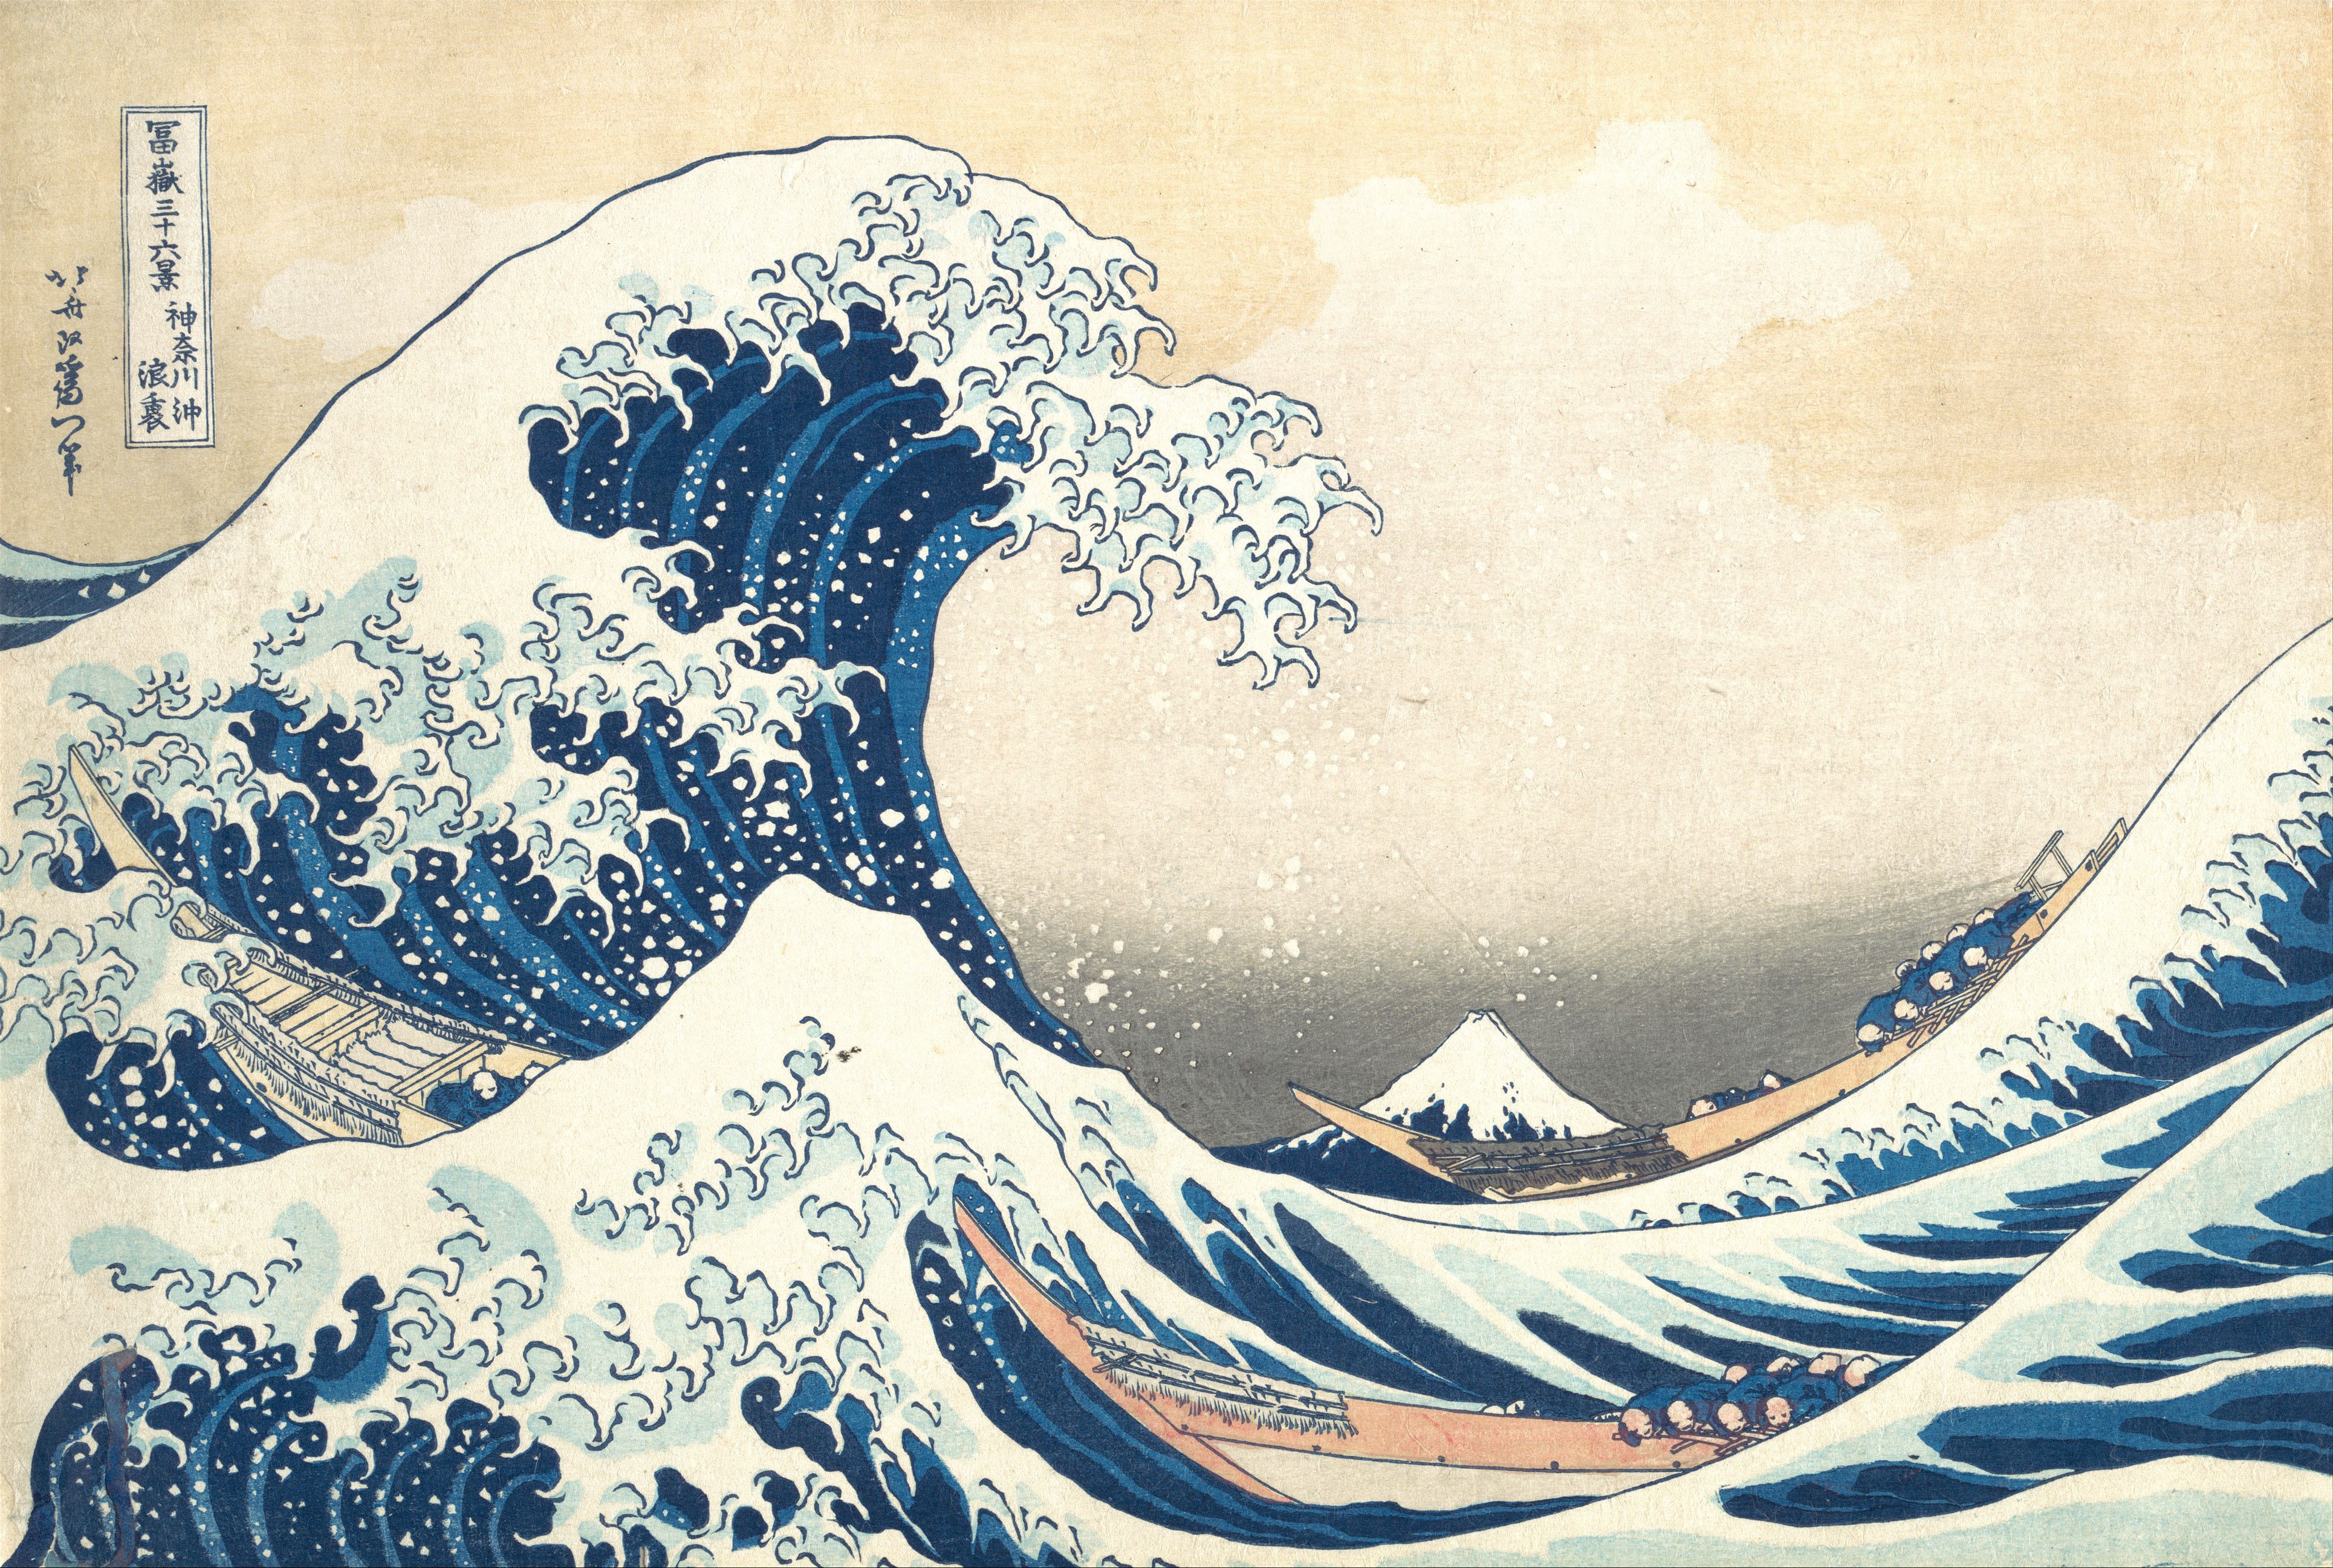 Japan Artwork Waves The Great Wave Off Kanagawa Asia Sea 3859x2594